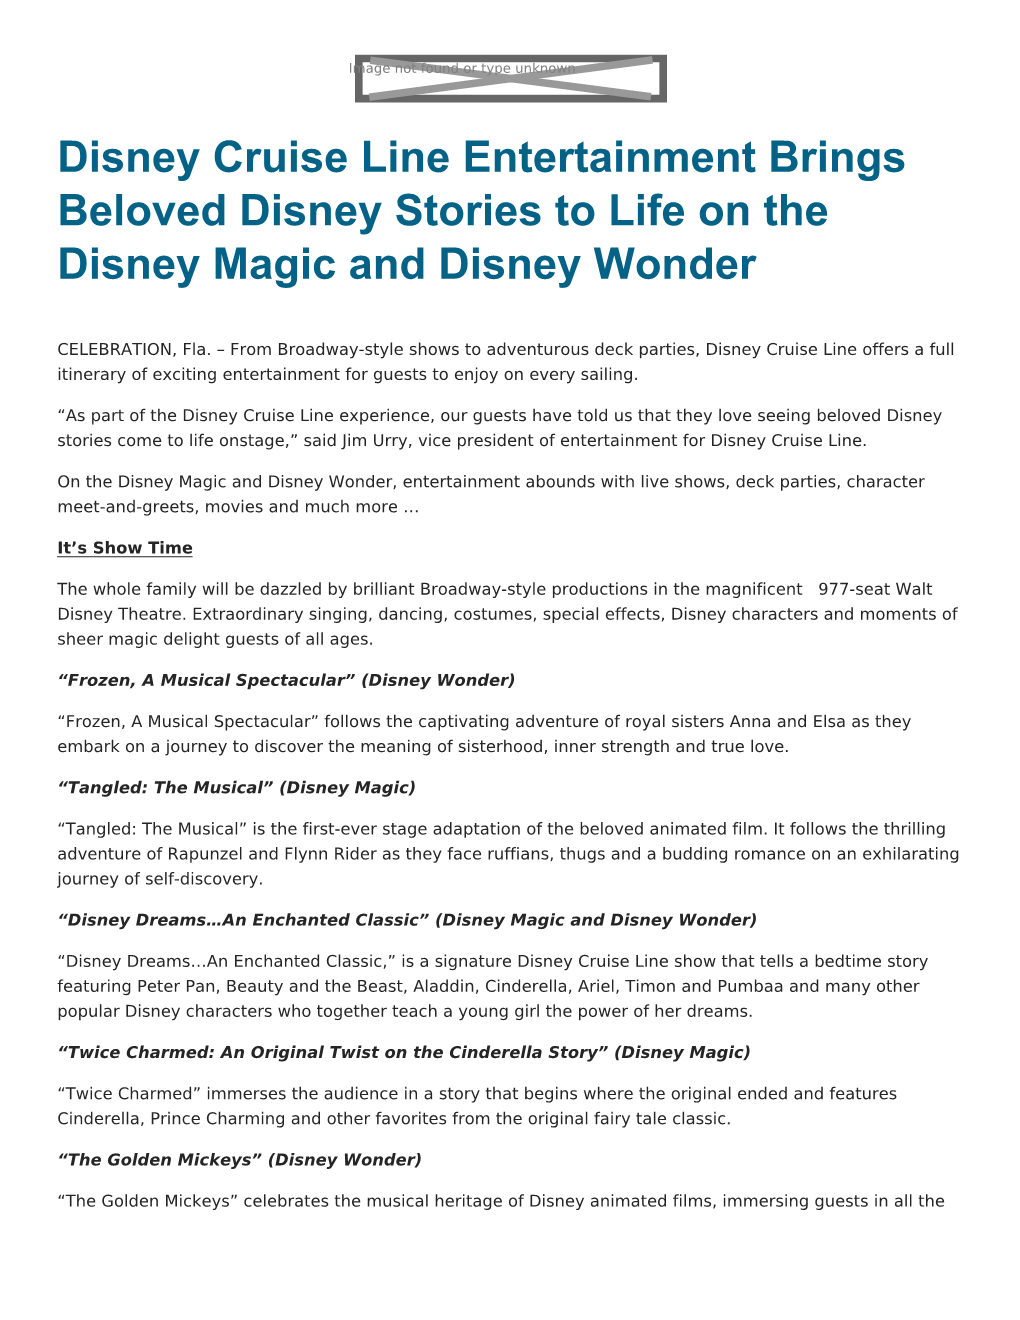 Disney Cruise Line Entertainment Brings Beloved Disney Stories to Life on the Disney Magic and Disney Wonder